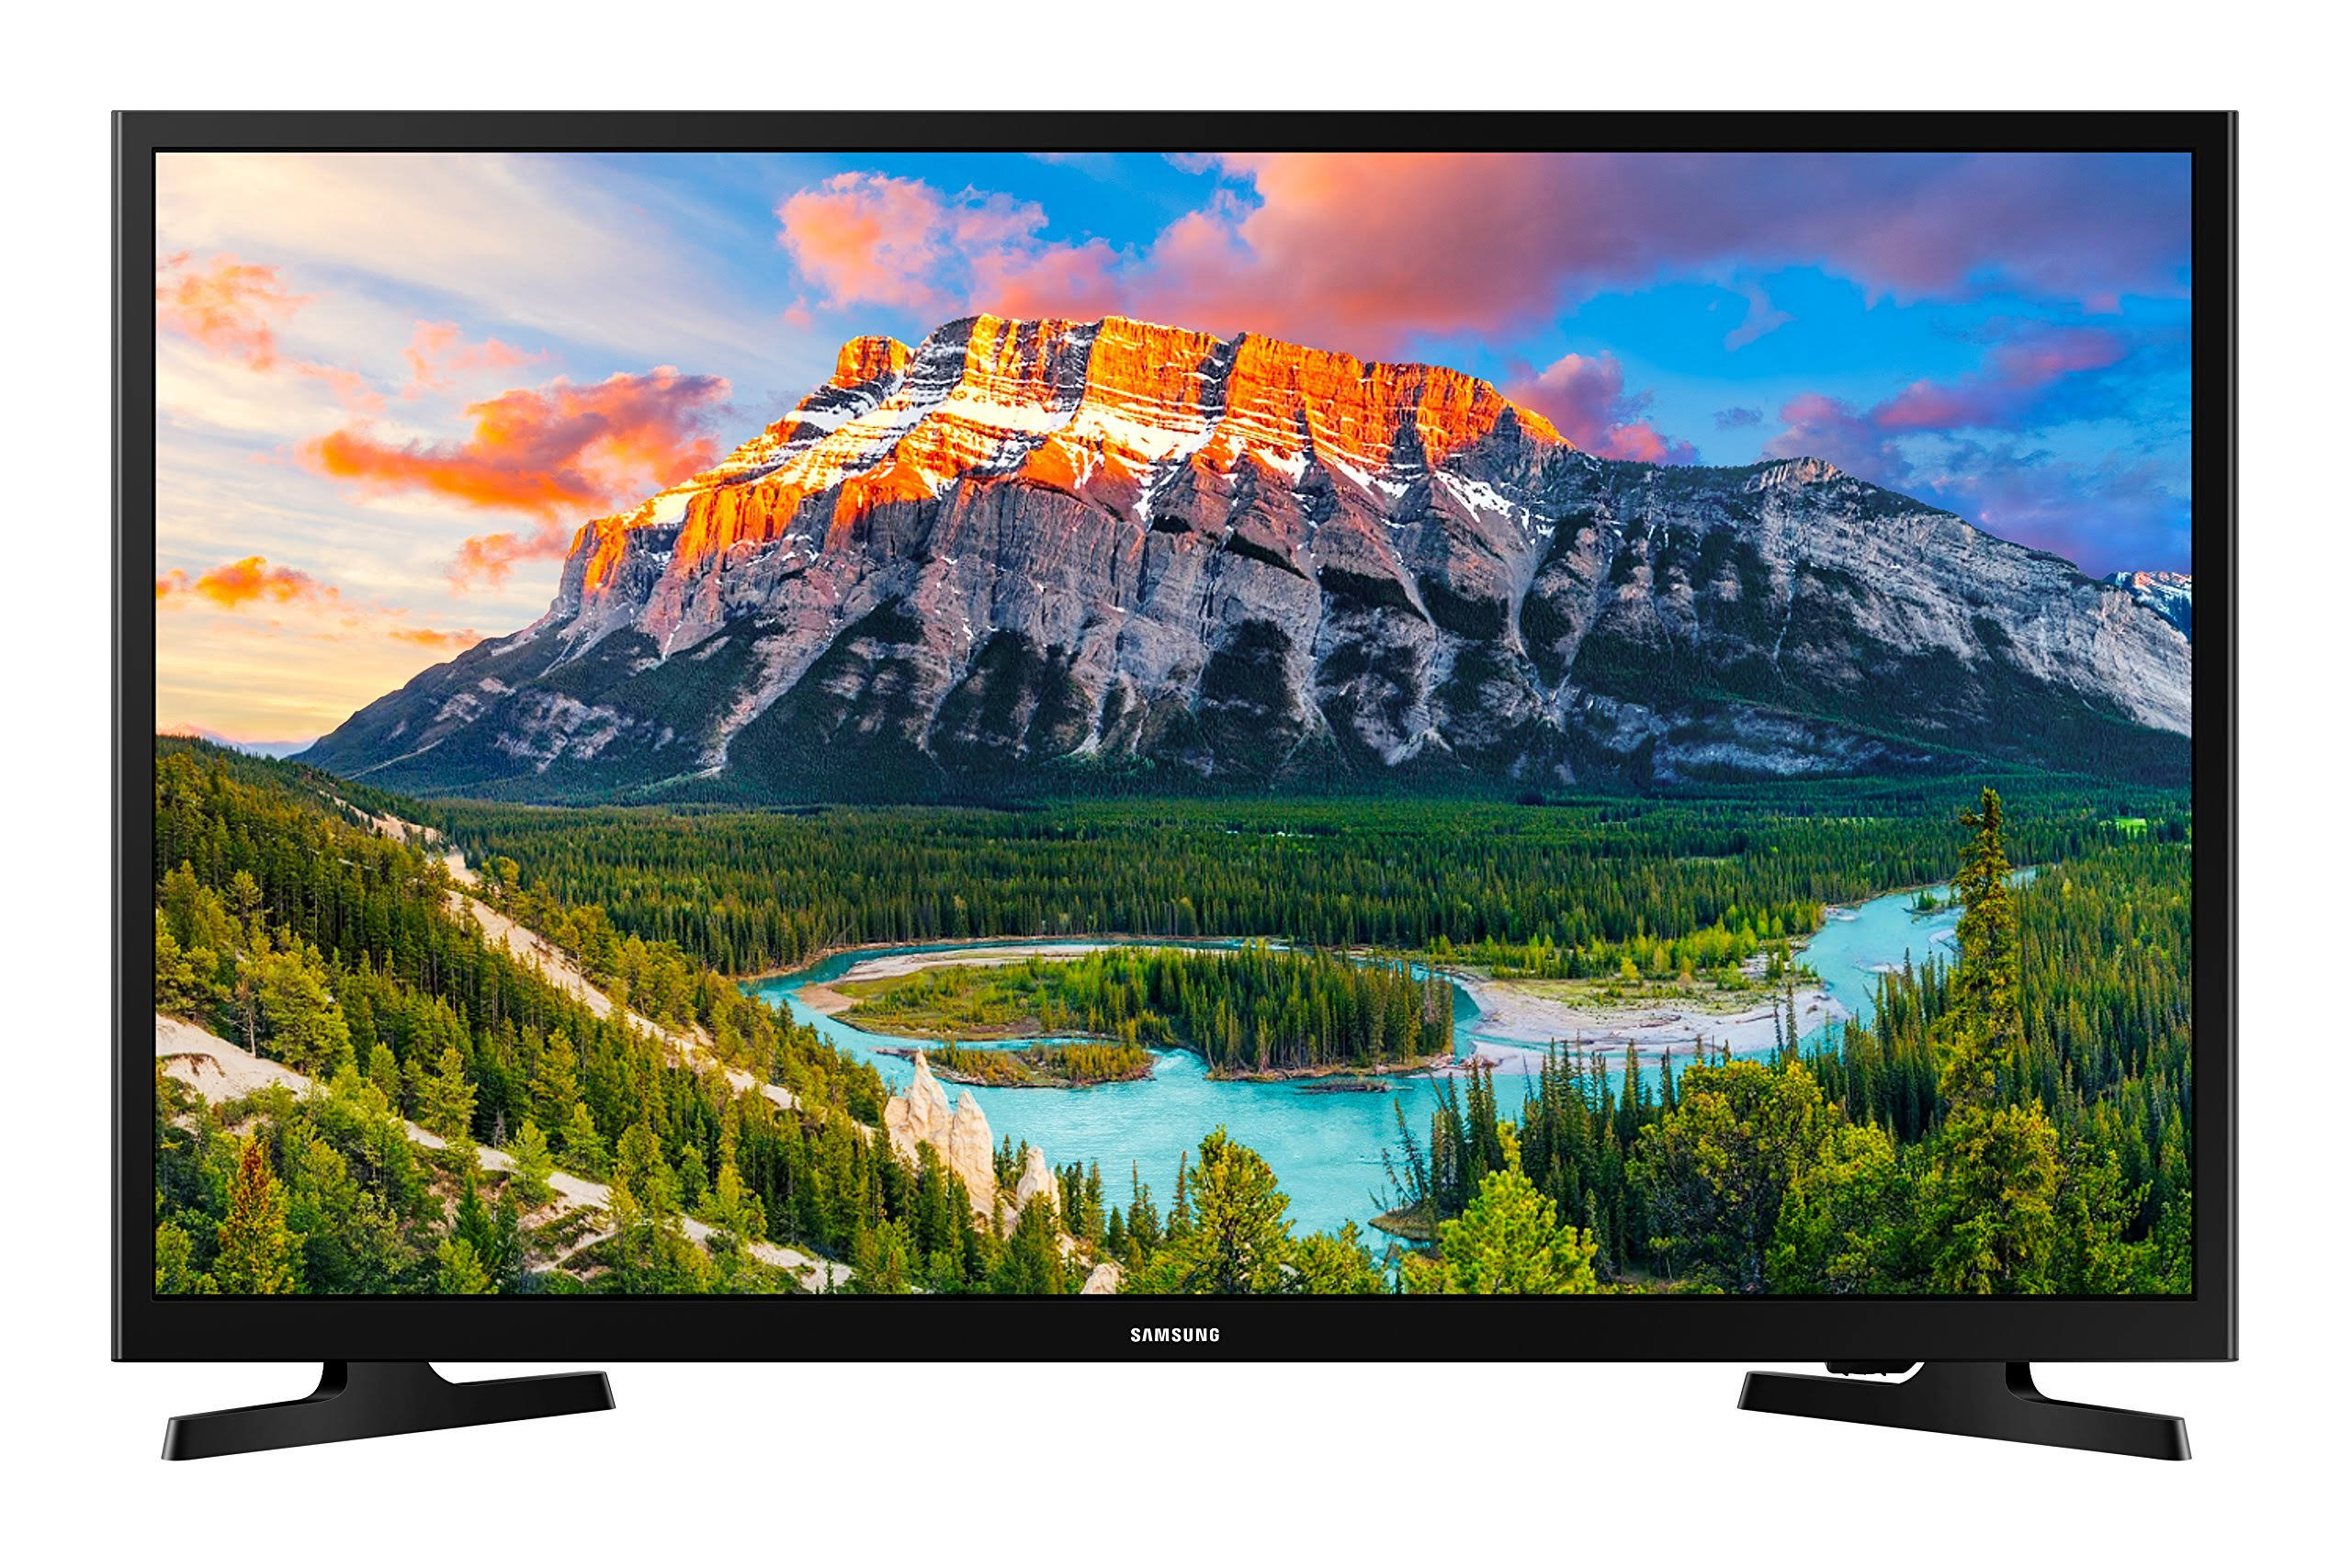 Samsung UN32N5300A Full HD Smart LED TV - Black, 32"